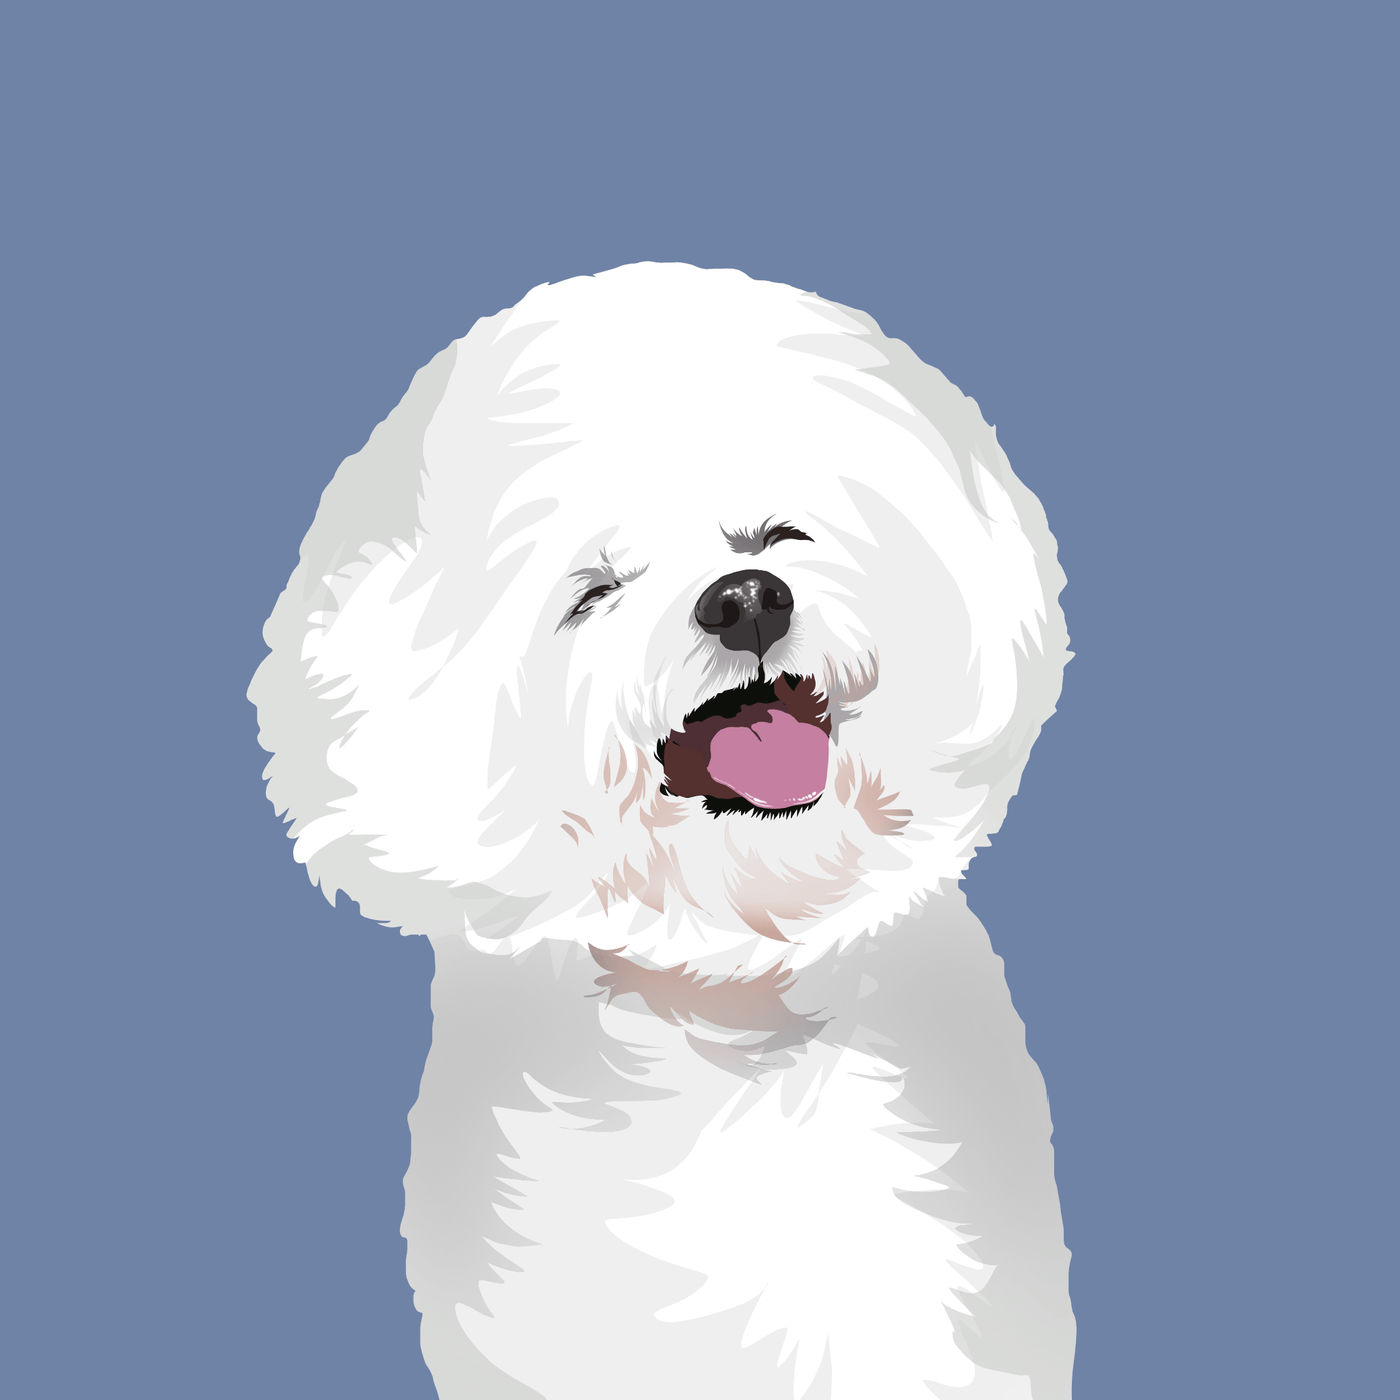 pet memorial vector art of an adorable fur puppy